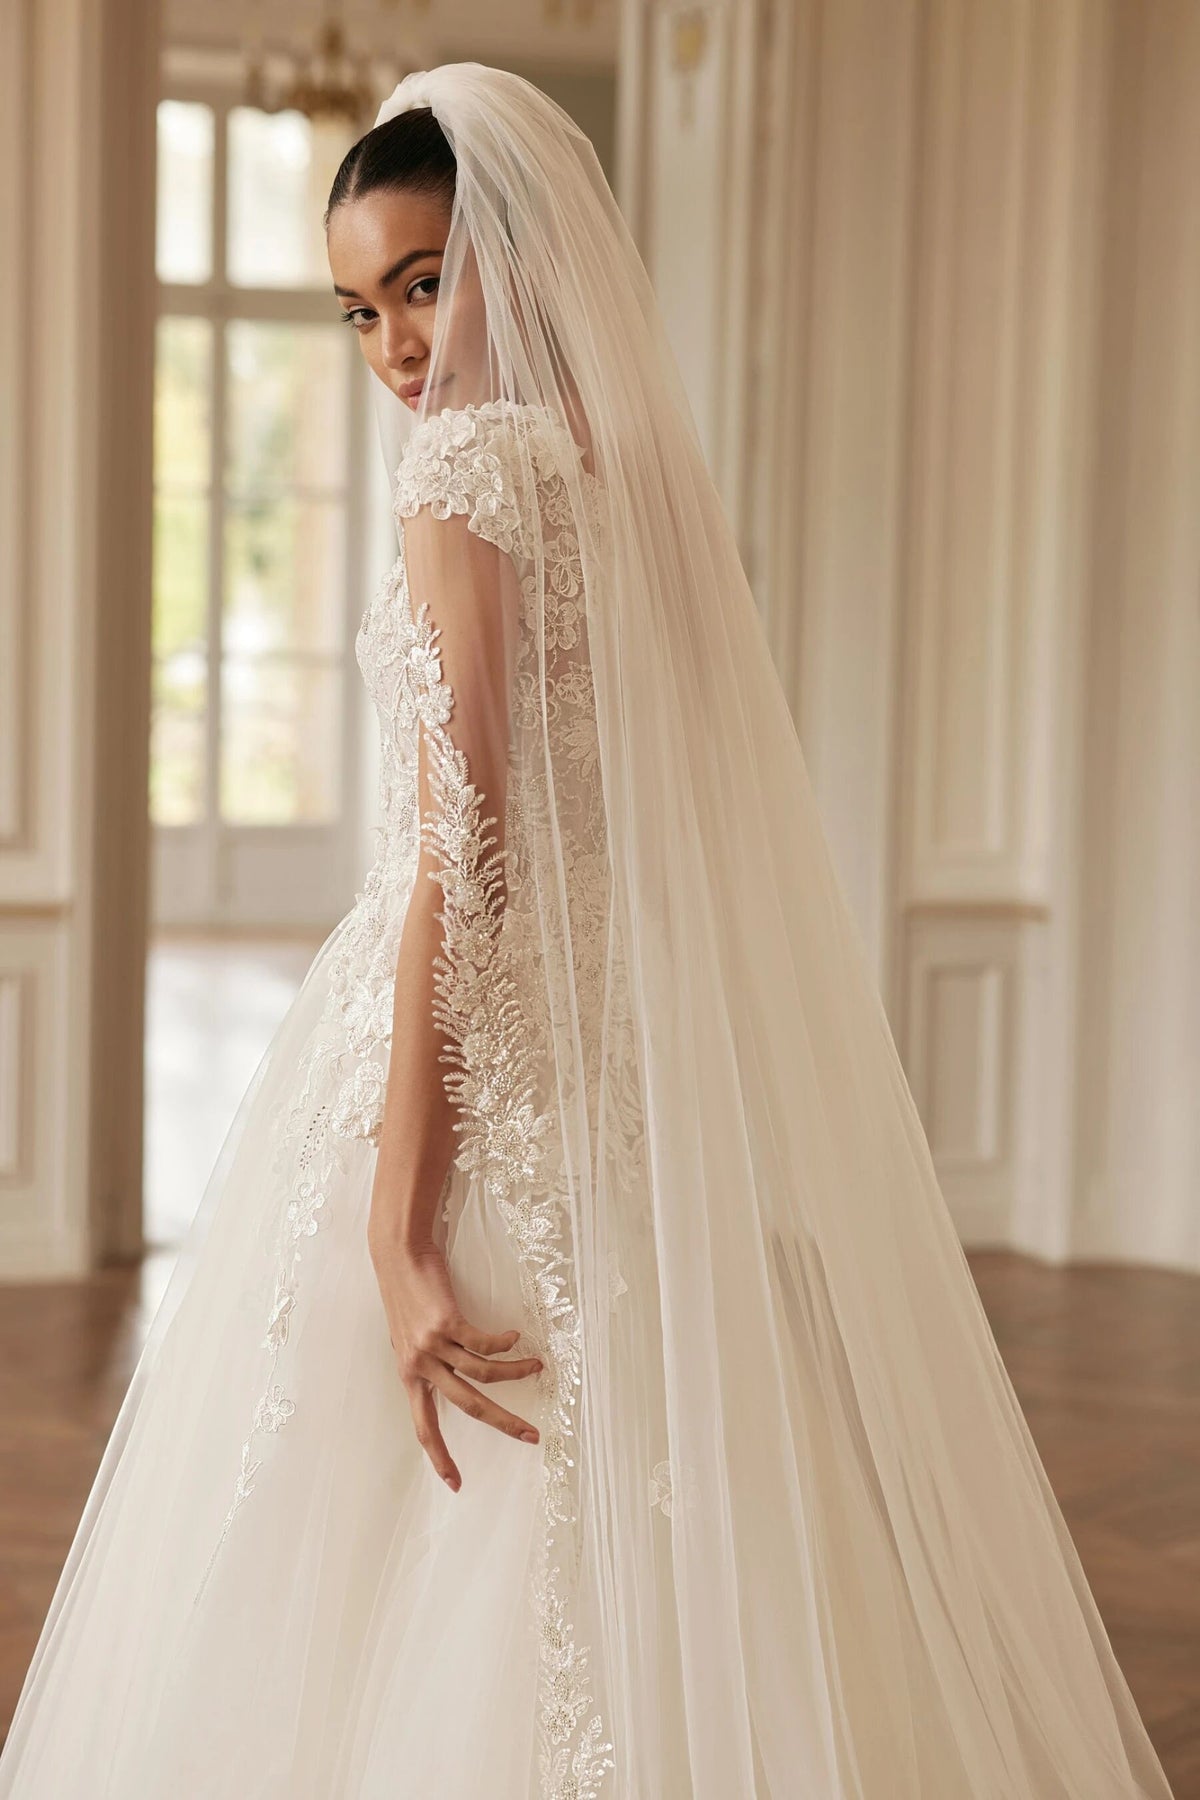 Princess Aline Short Cap Sleeves Translucent Bodice Deep V Neckline Floral Wedding Dress Bridal Gown 3D Flowers